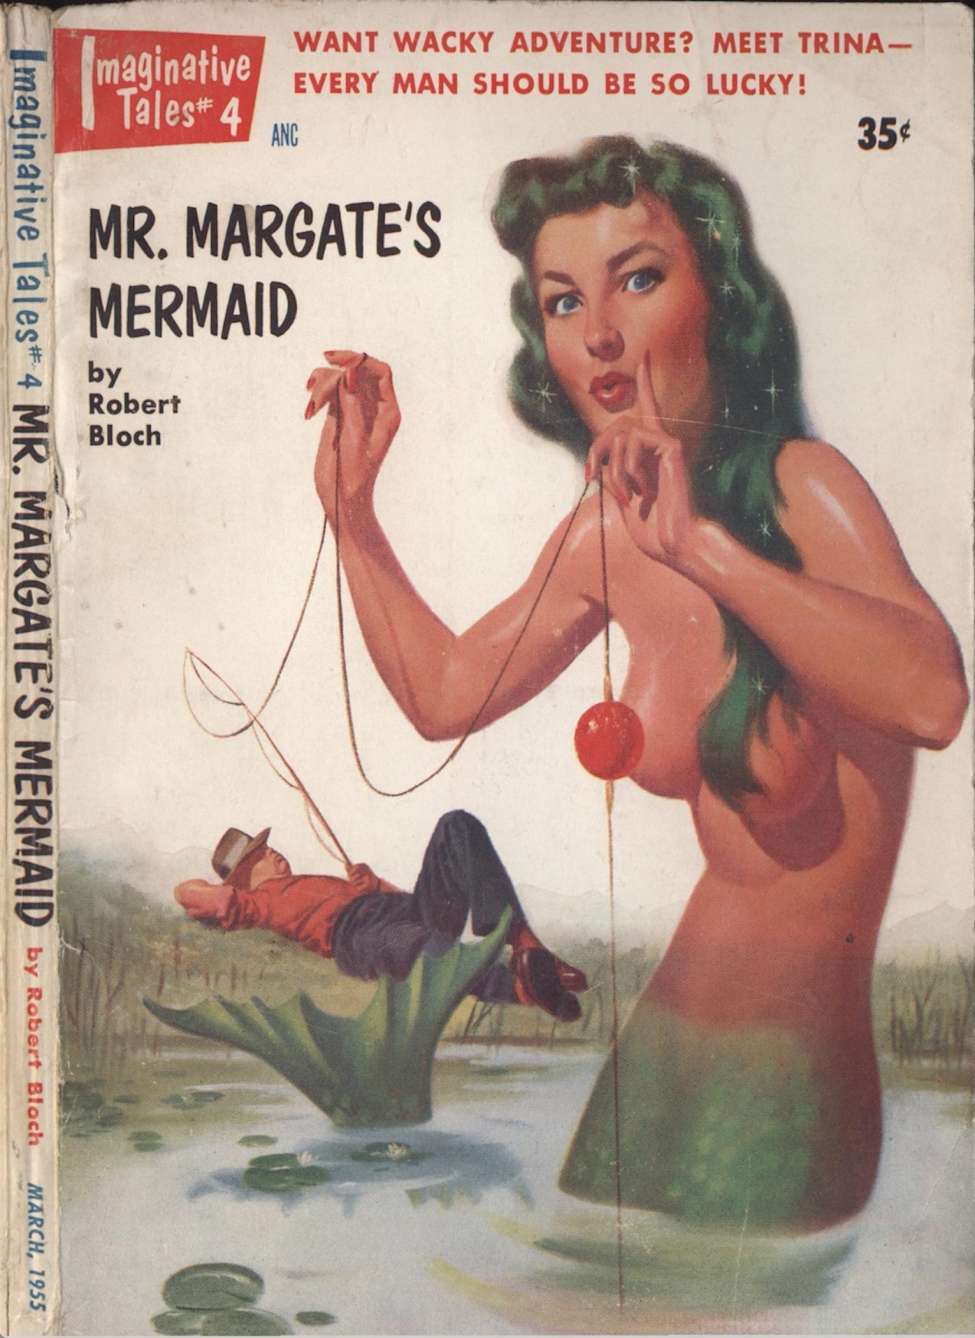 Book Cover For Imaginative Tales v1 4 - Mr. Margate's Mermaid - Robert Bloch